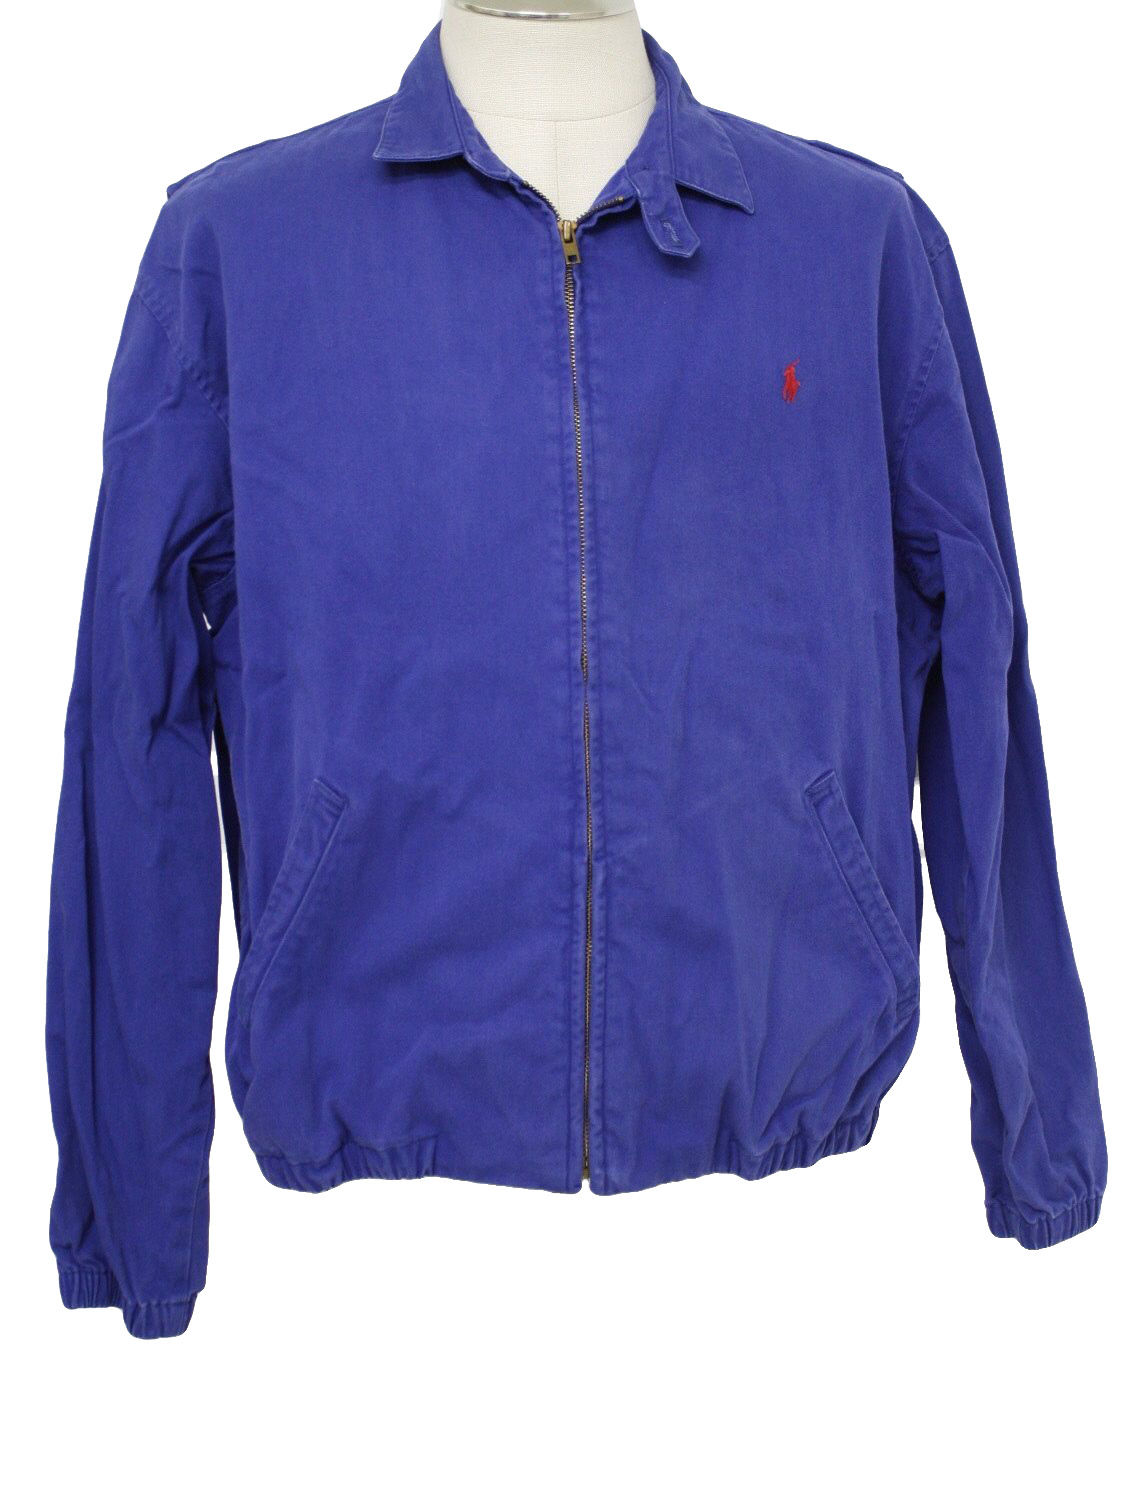 Retro Eighties Jacket: 80s -Polo Ralph Lauren- Mens royal blue cotton ...